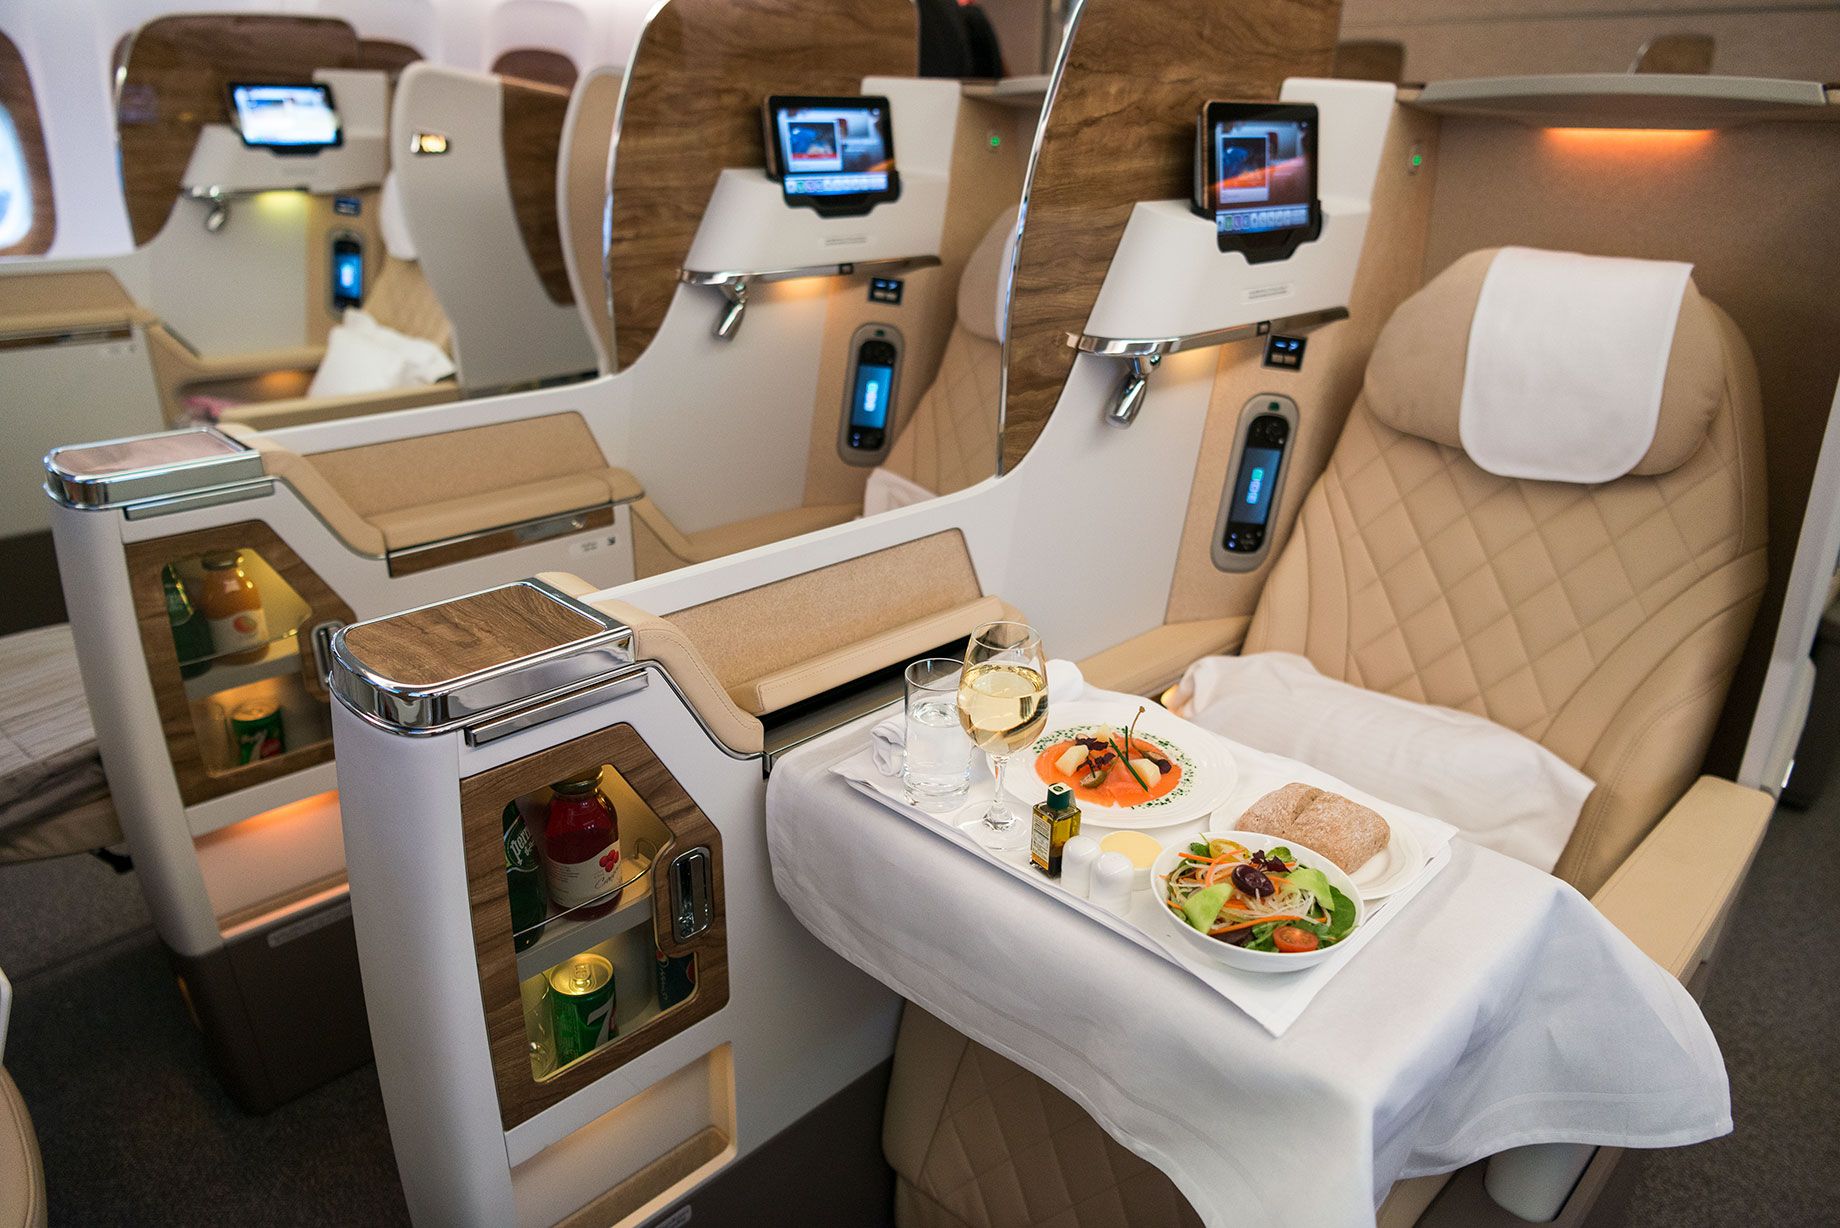 Emirates Business Class Seats & Food